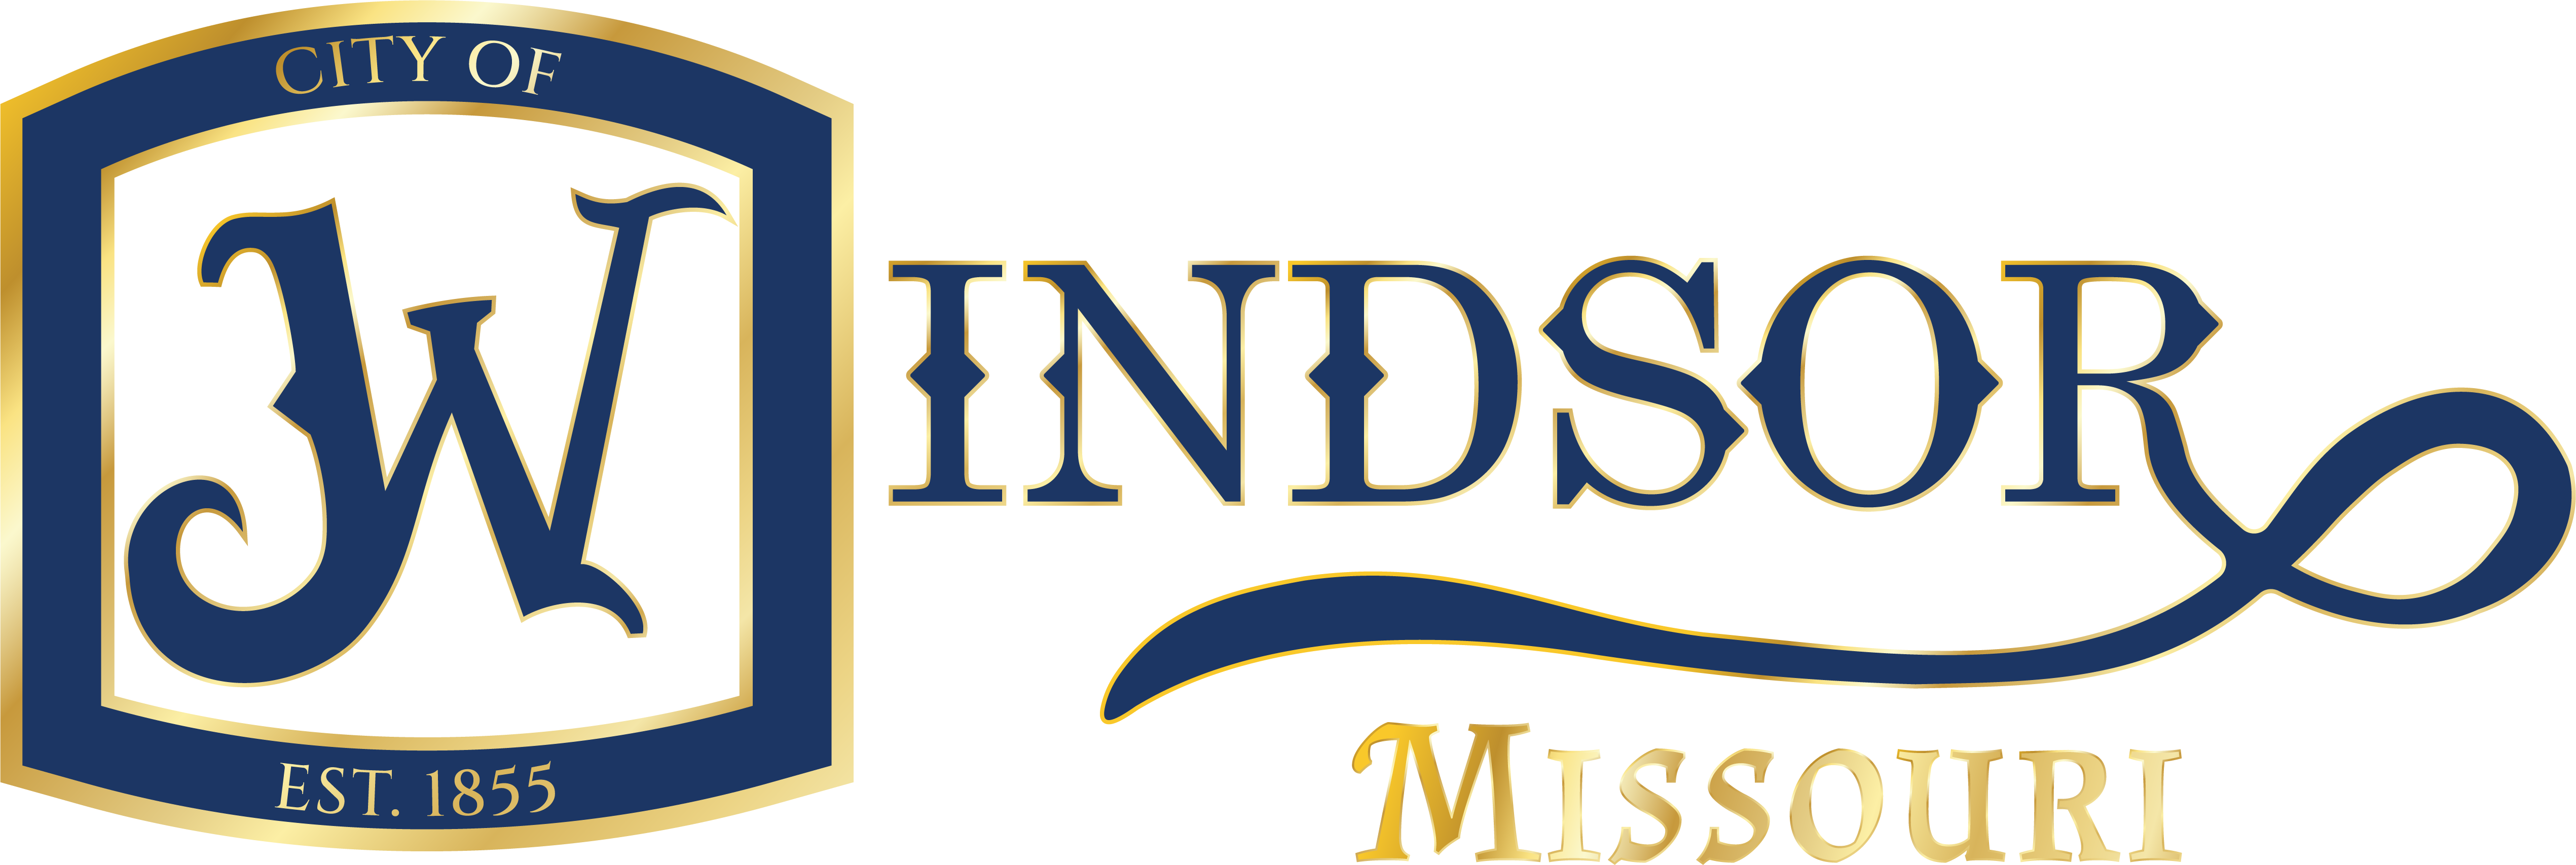 City of Windsor Mo Logo